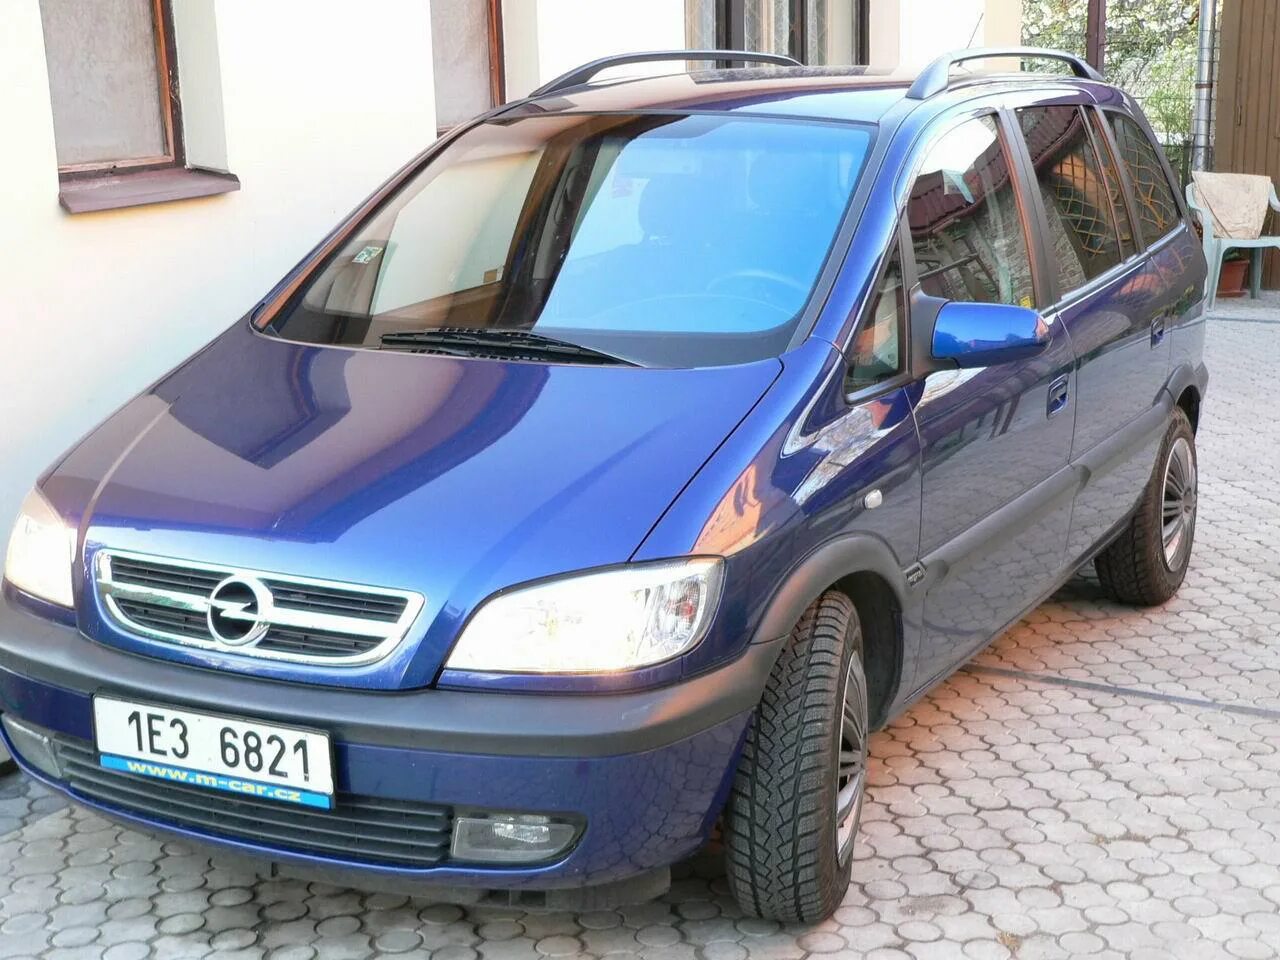 Opel Zafira 2.2. Опель Зафира а 2.2. Opel Zafira 2004. Опель Зафира 2004. Опель зафира 2 купить